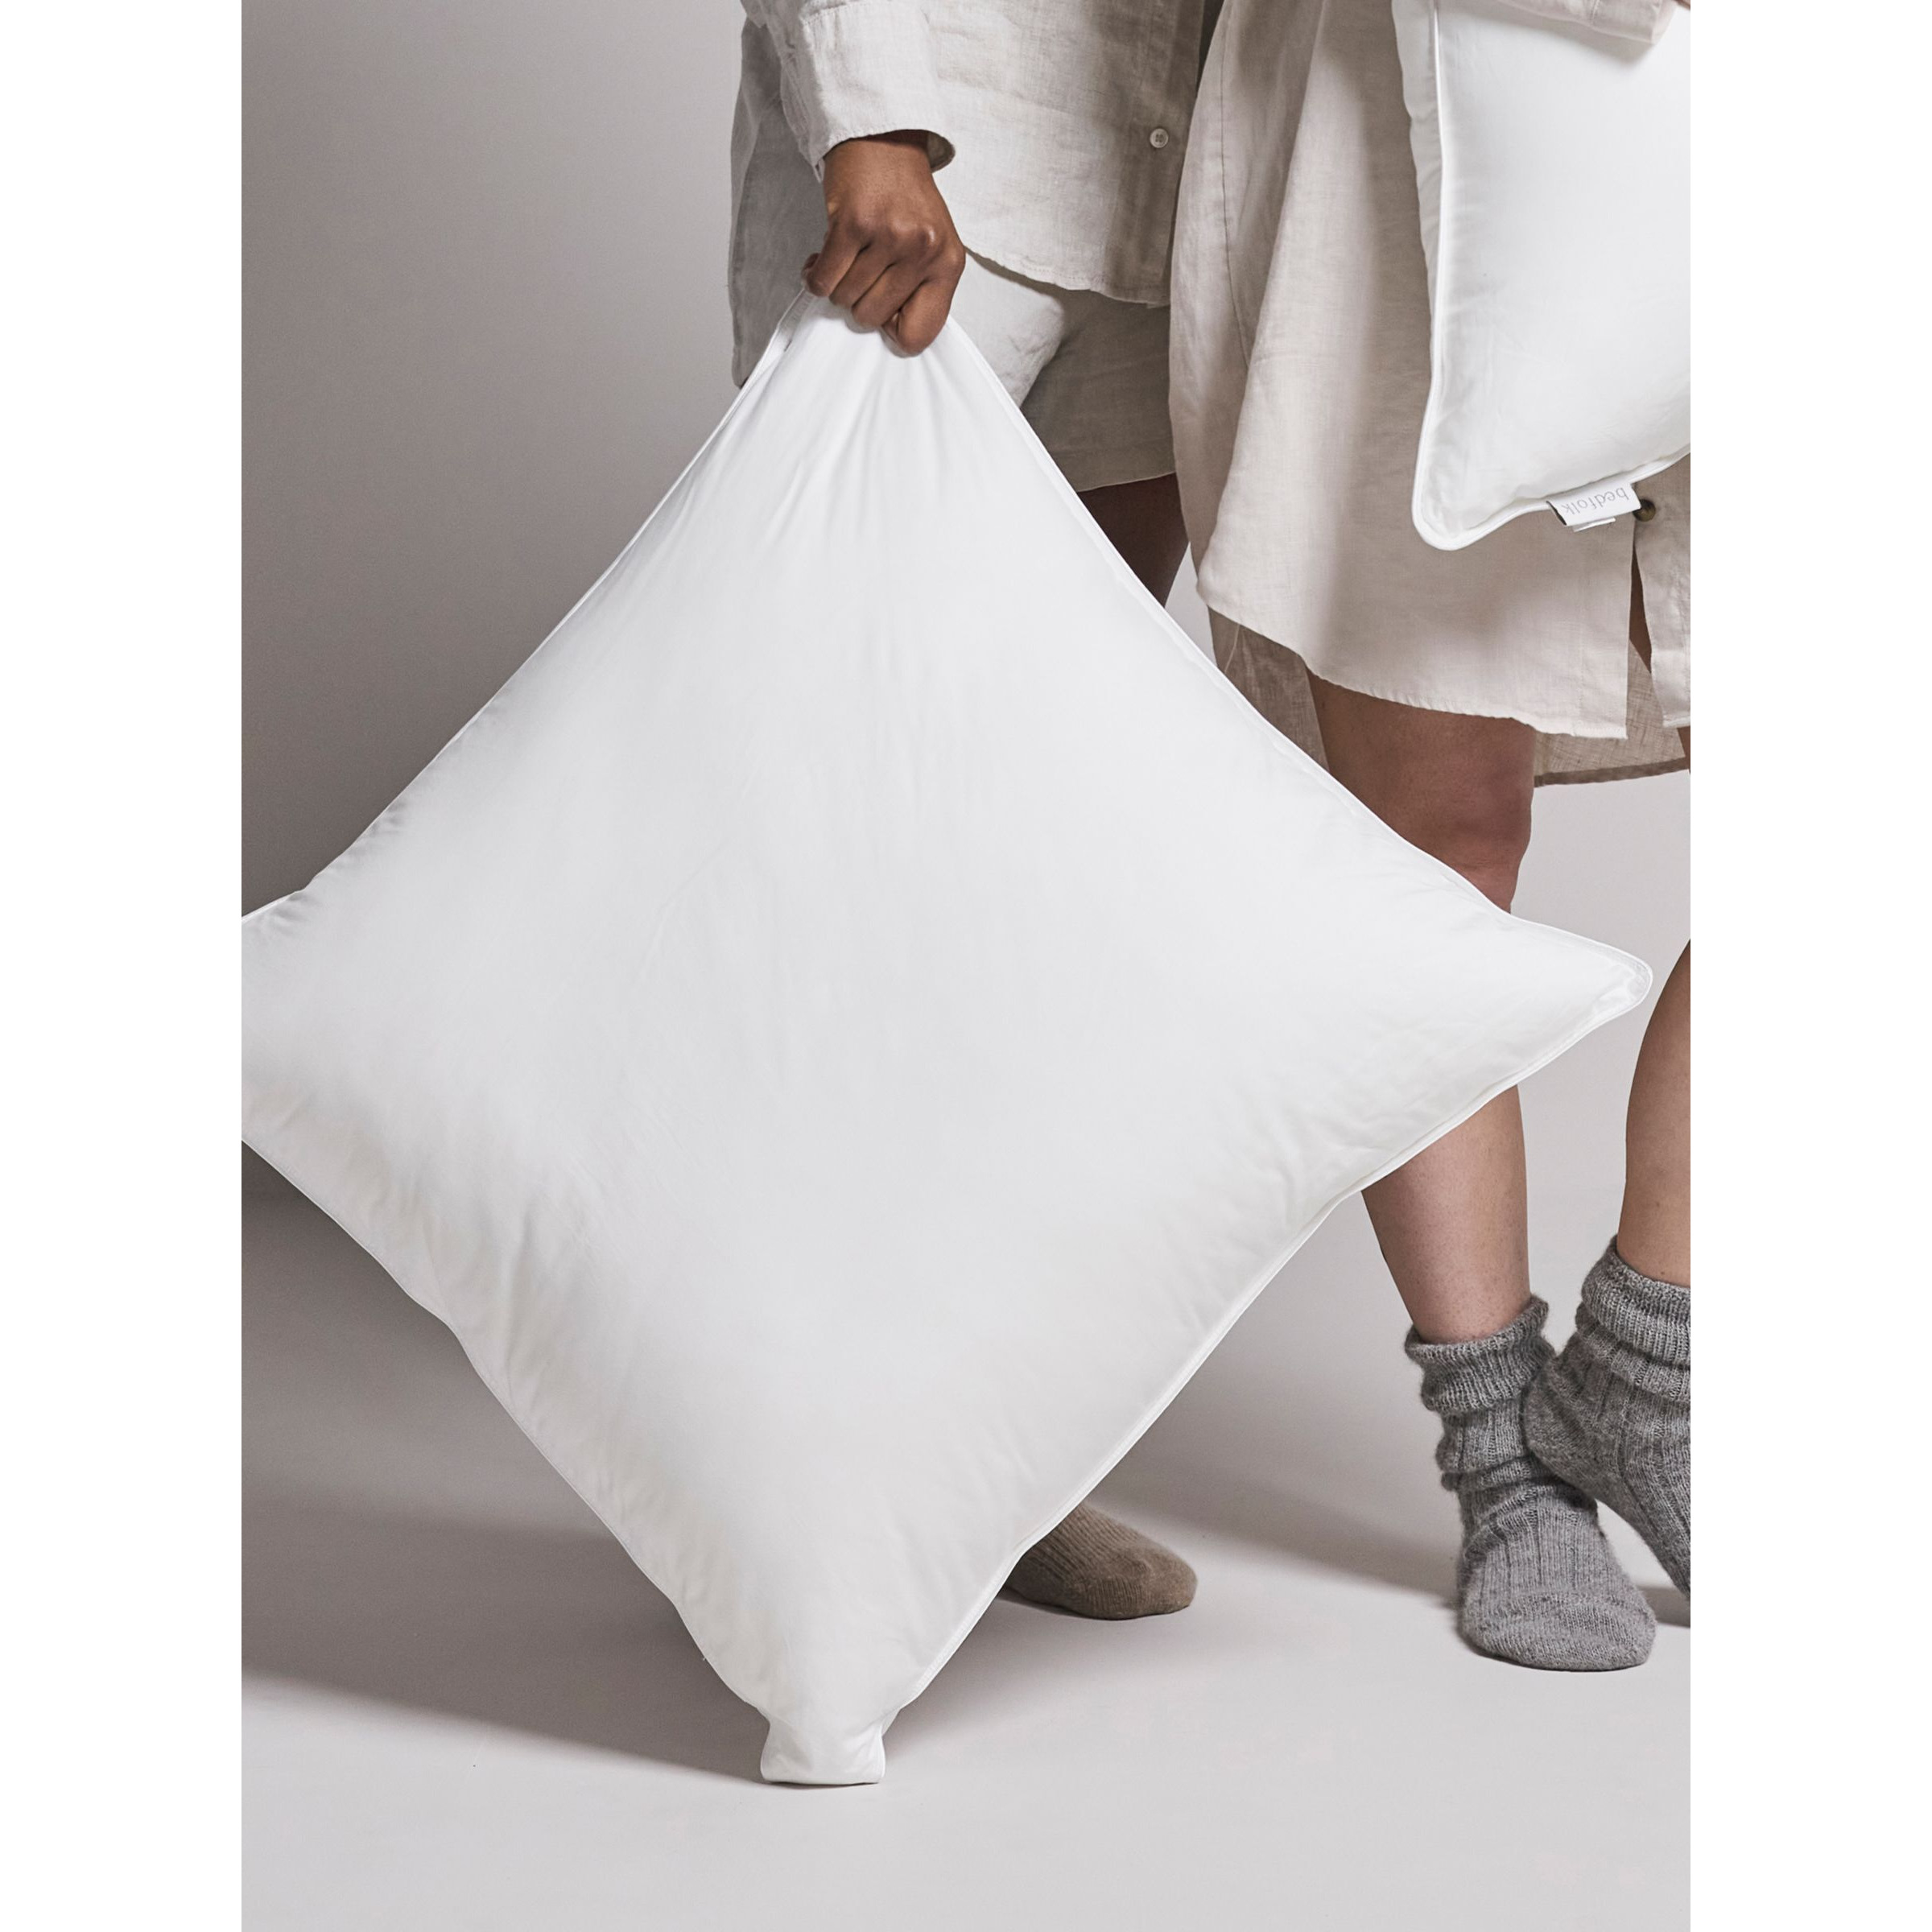 Bedfolk Down Alternative Square Pillow, Soft/Medium - image 1